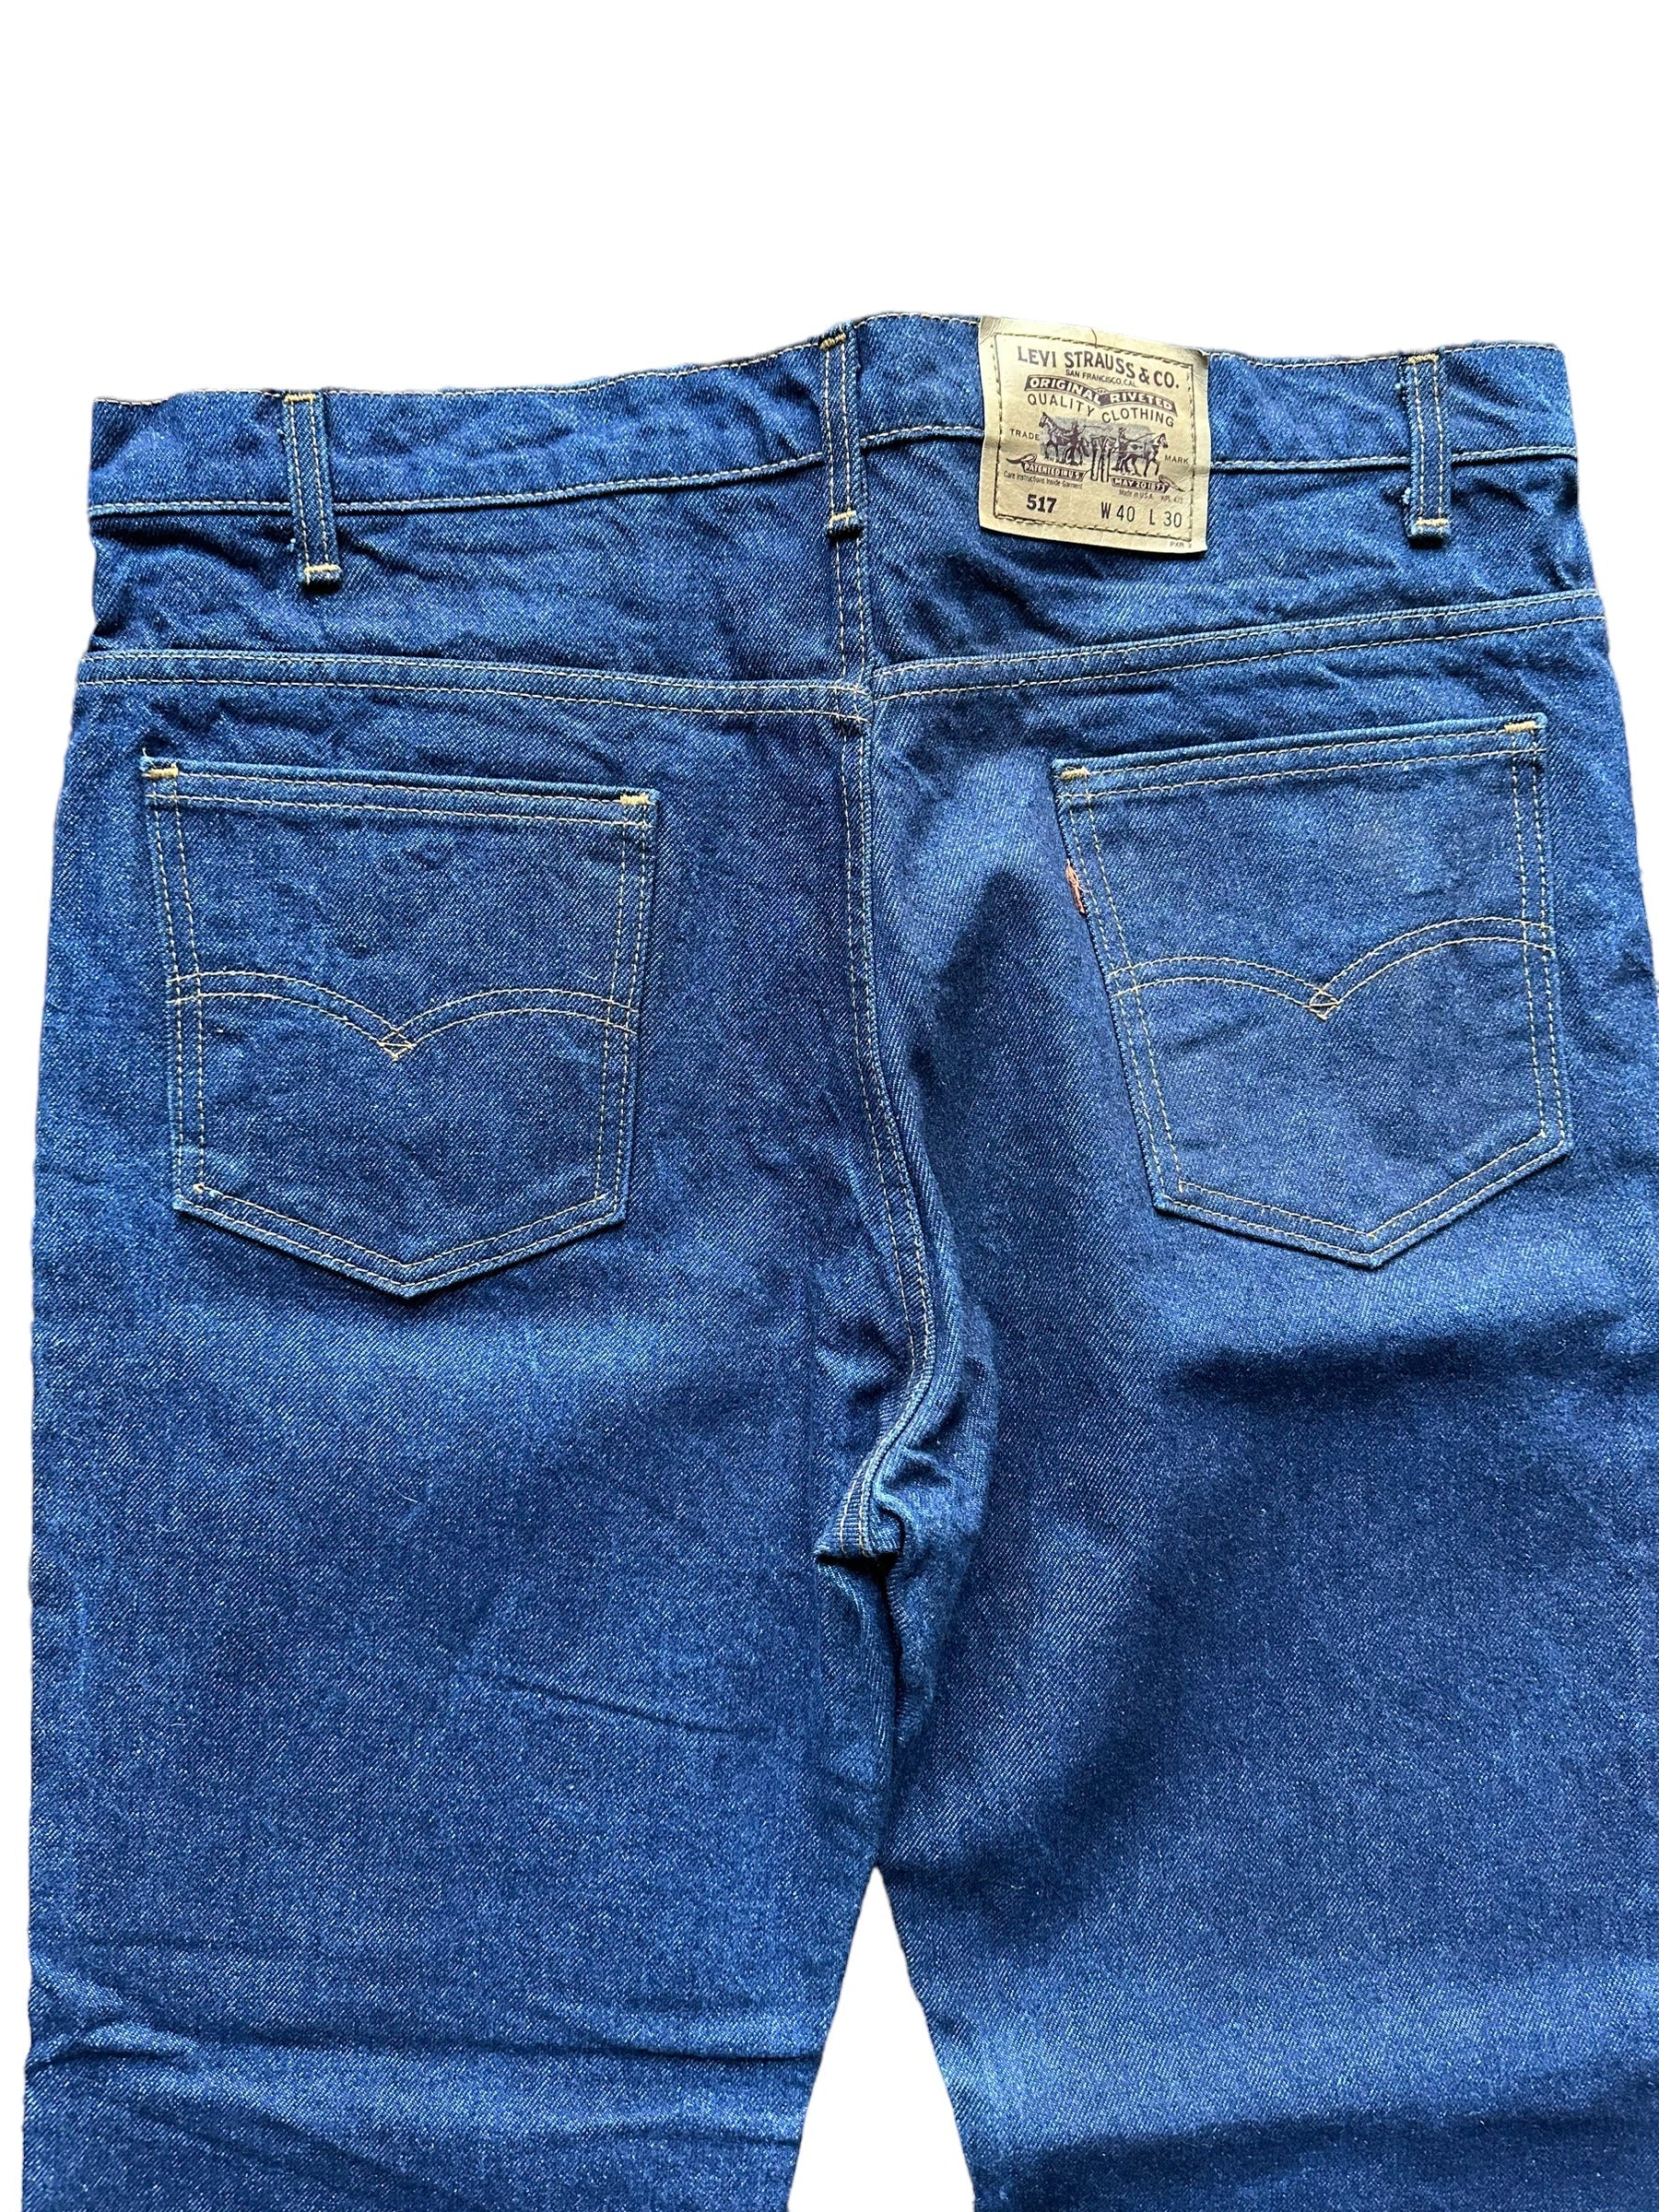 Back pockets view of Deadstock 90s USA Levi's 501 Black Jeans 26x33 | Seattle Deadstock Vintage Jeans | Barn Owl Vintage Denim